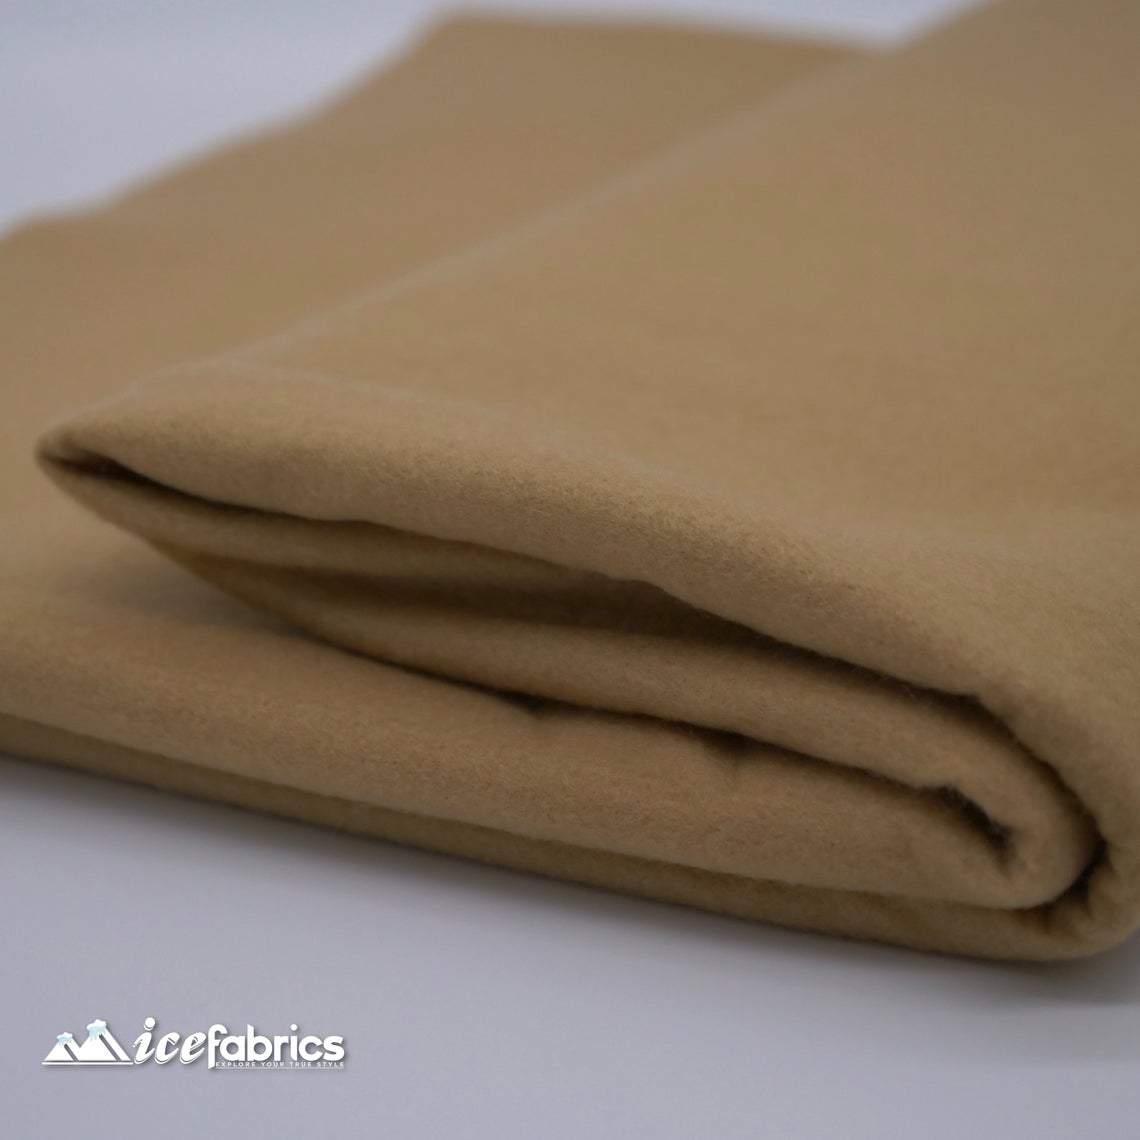 Acrylic Felt Fabric By The Roll | 20 yards | Wholesale Fabric ICE FABRICS Nude